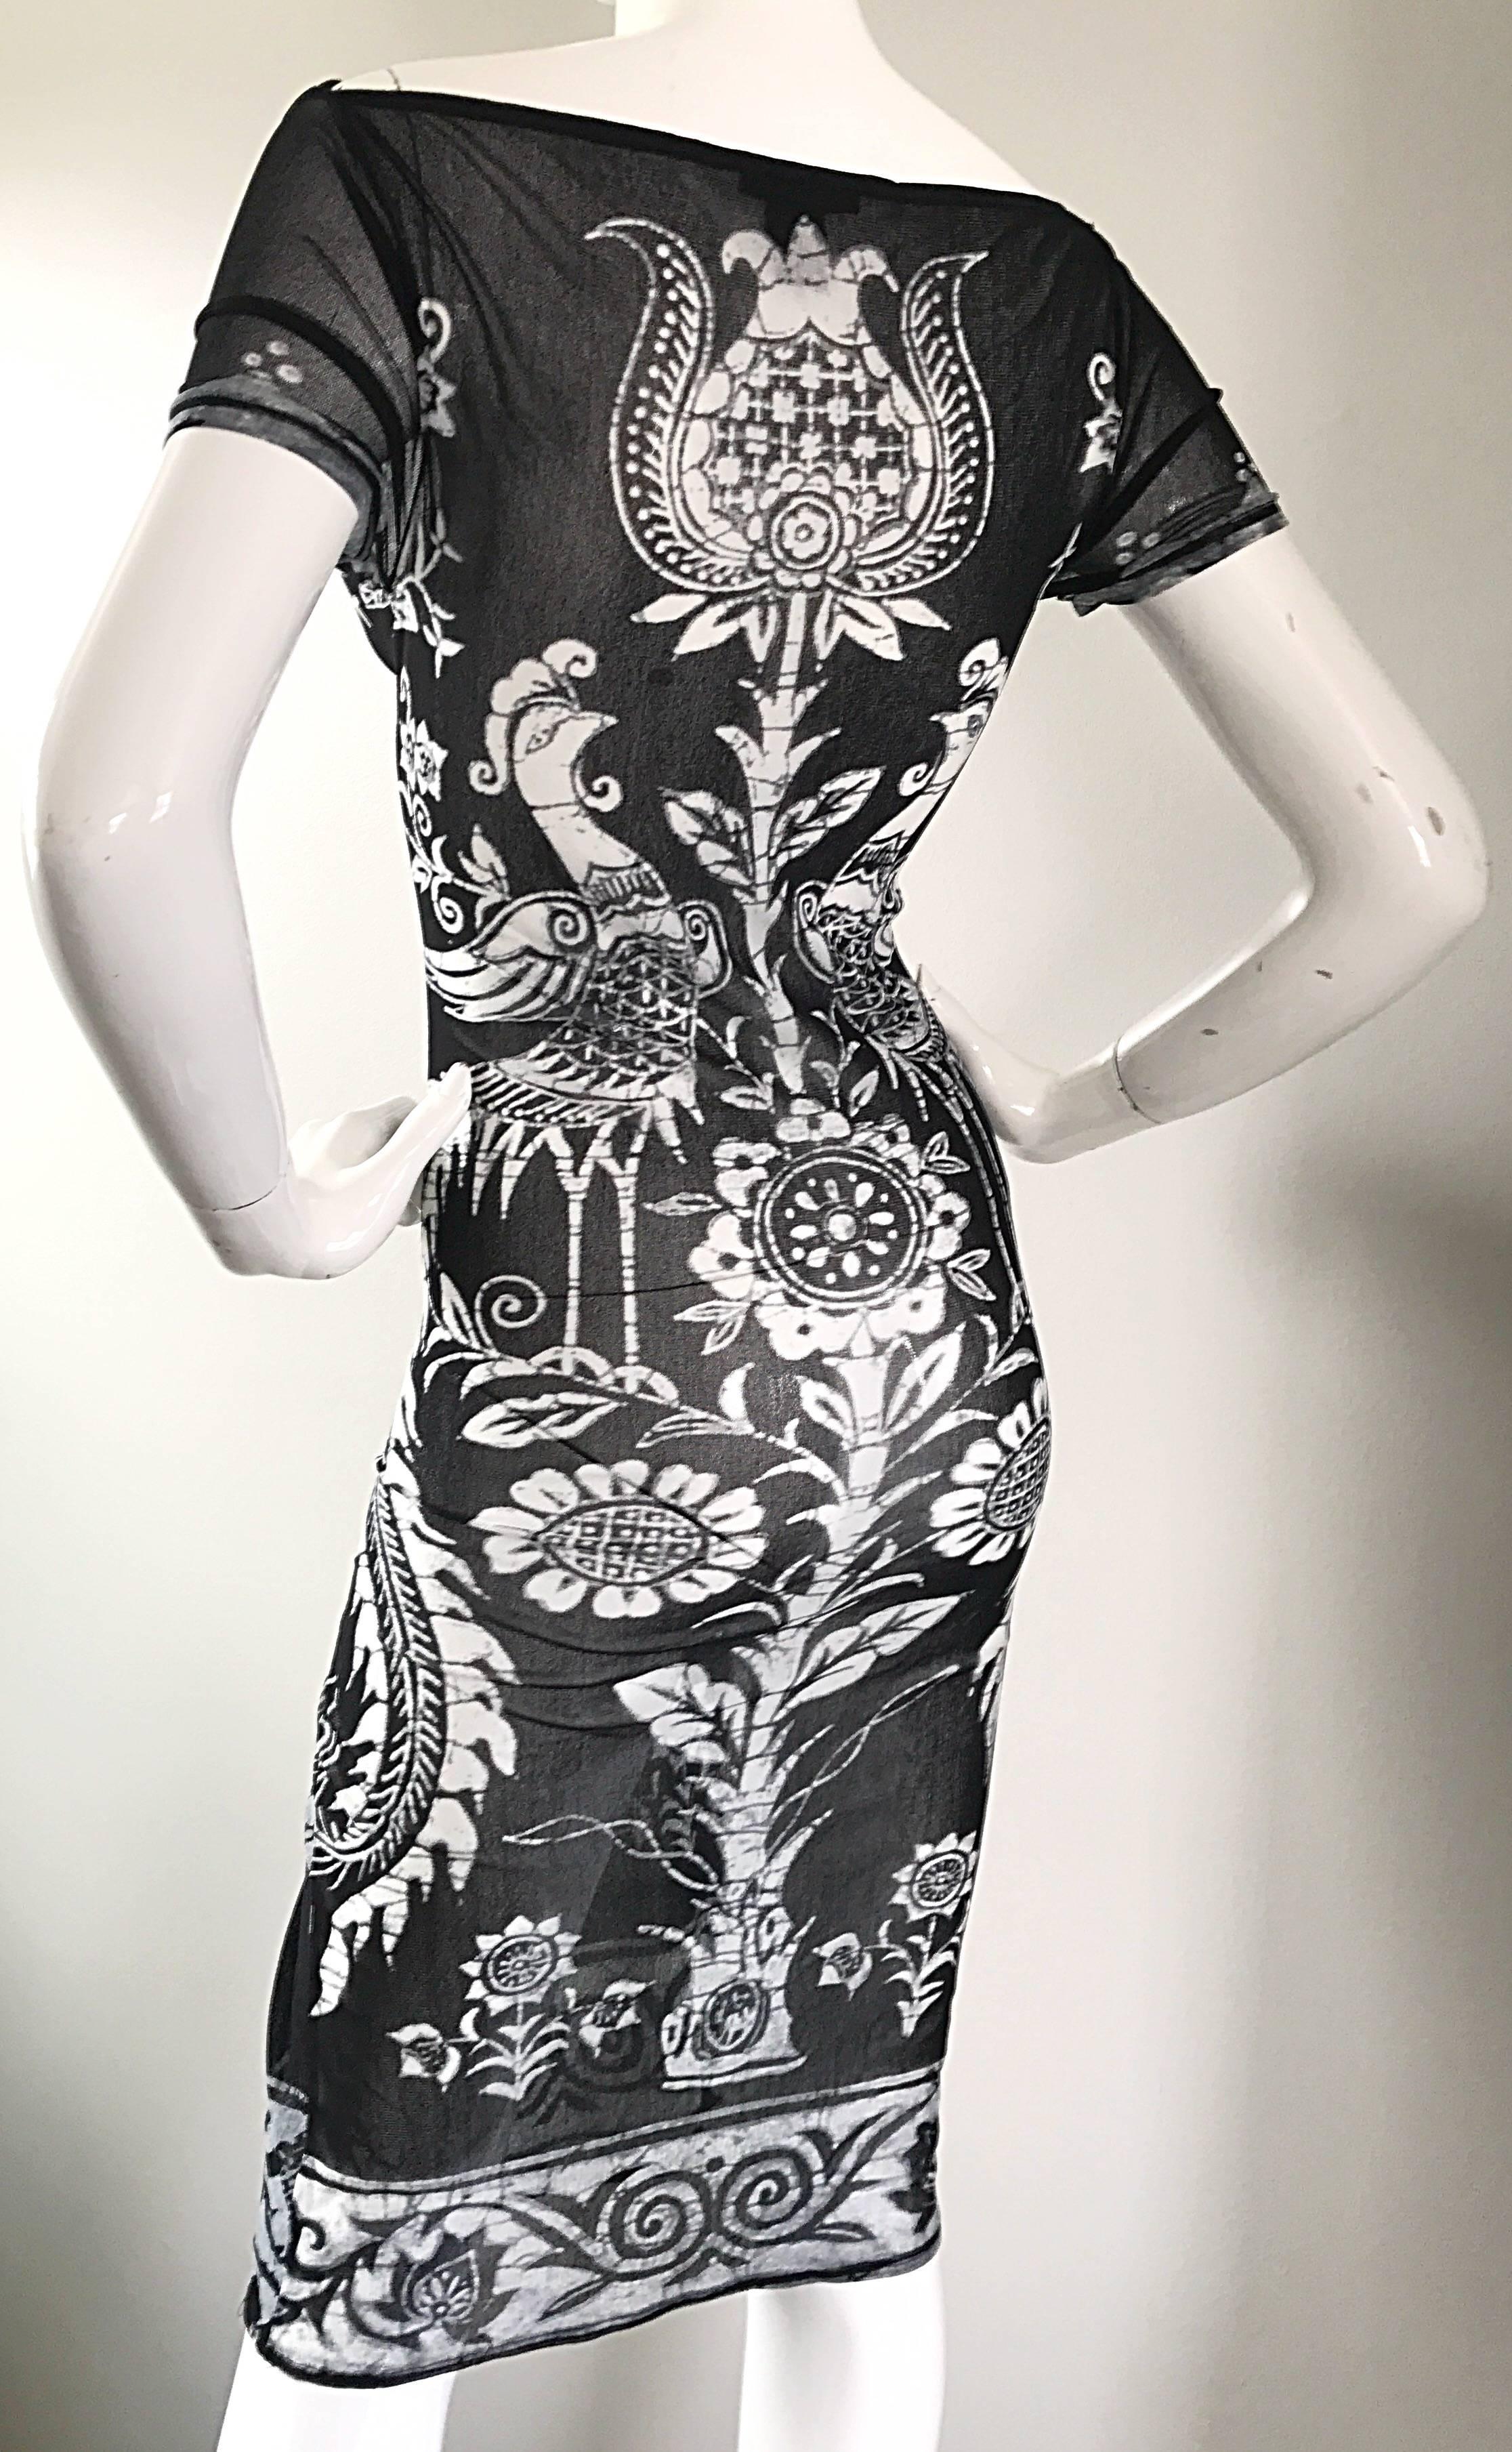 Women's Rare Vivienne Tam 1990s Black and White Sheer Asian Themed 90s Vintage Dress